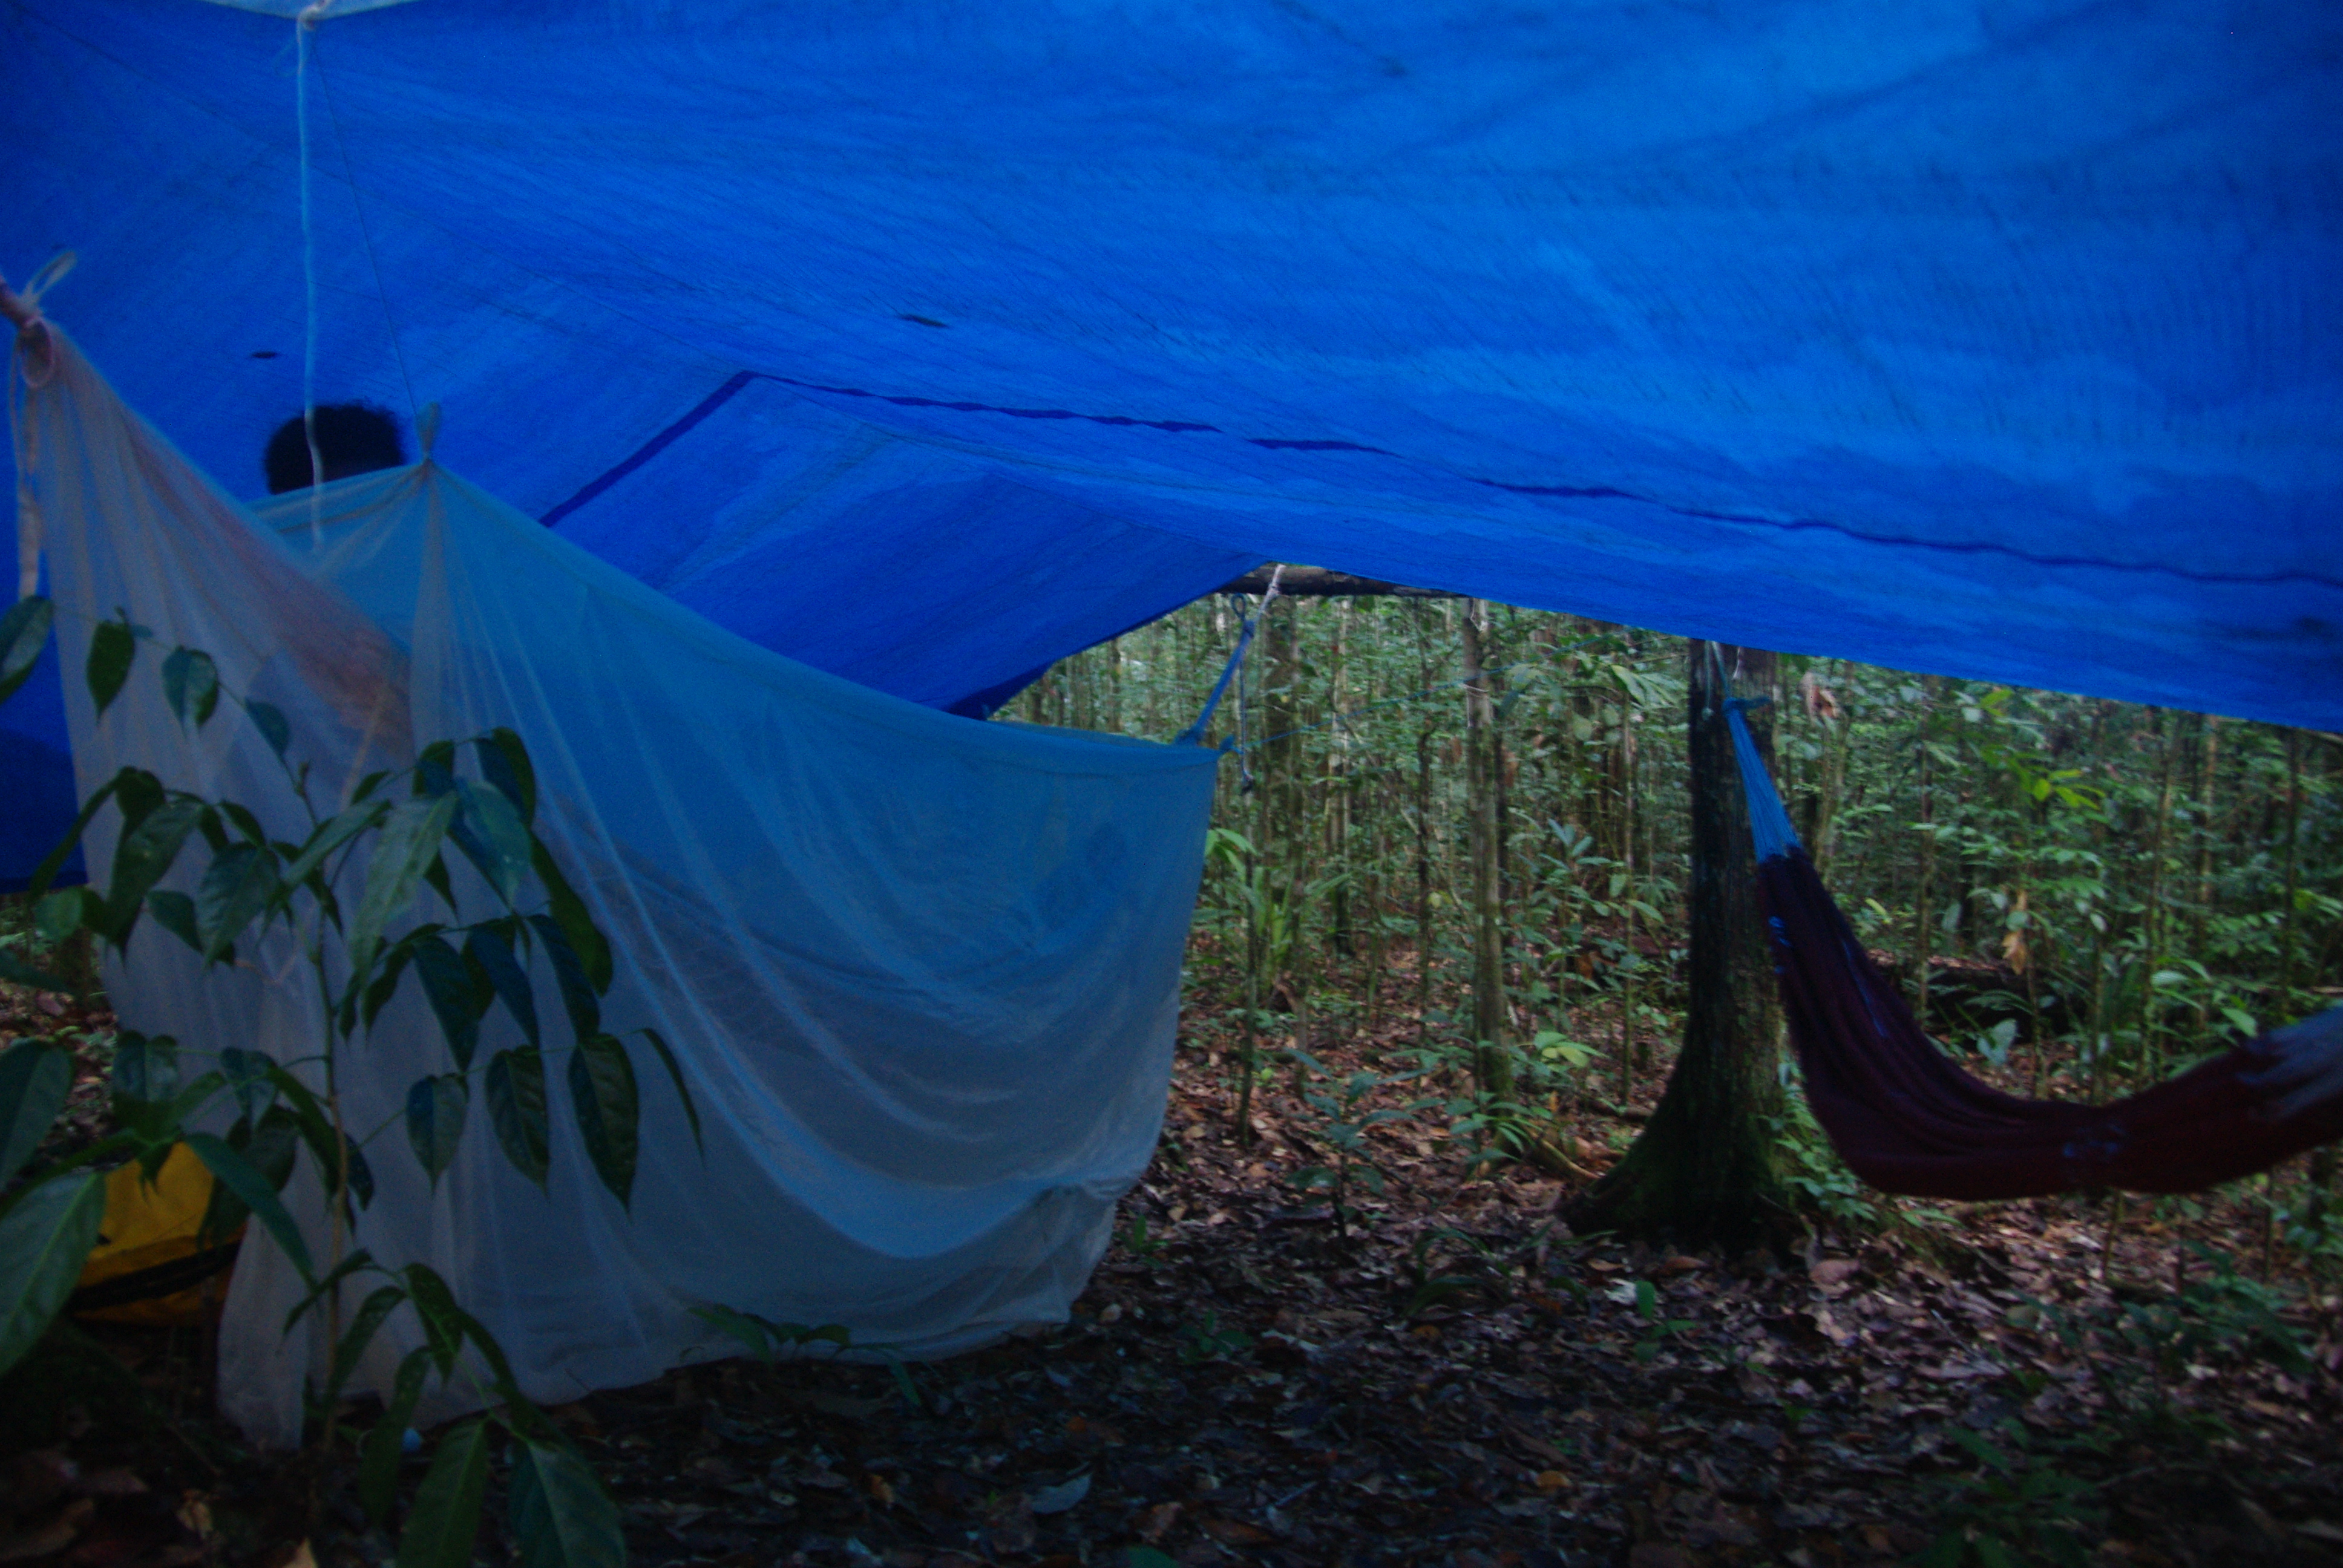 Accommodations for the night: tarp, hammock, mosquito net